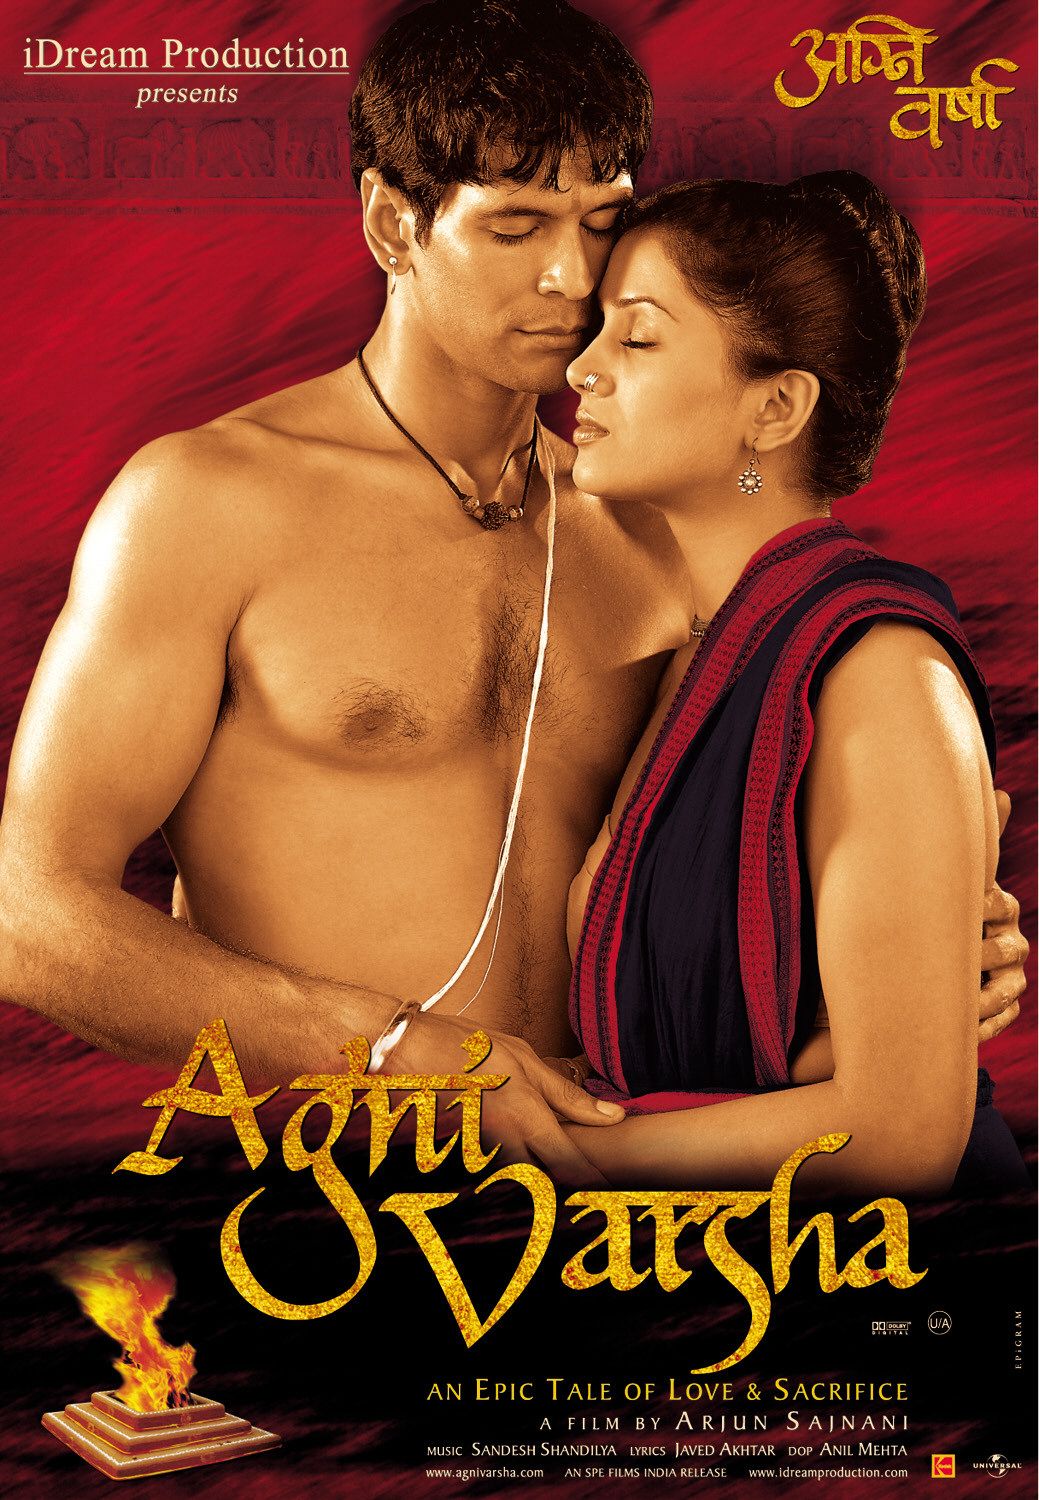 Extra Large Movie Poster Image for Agni Varsha (#2 of 4)